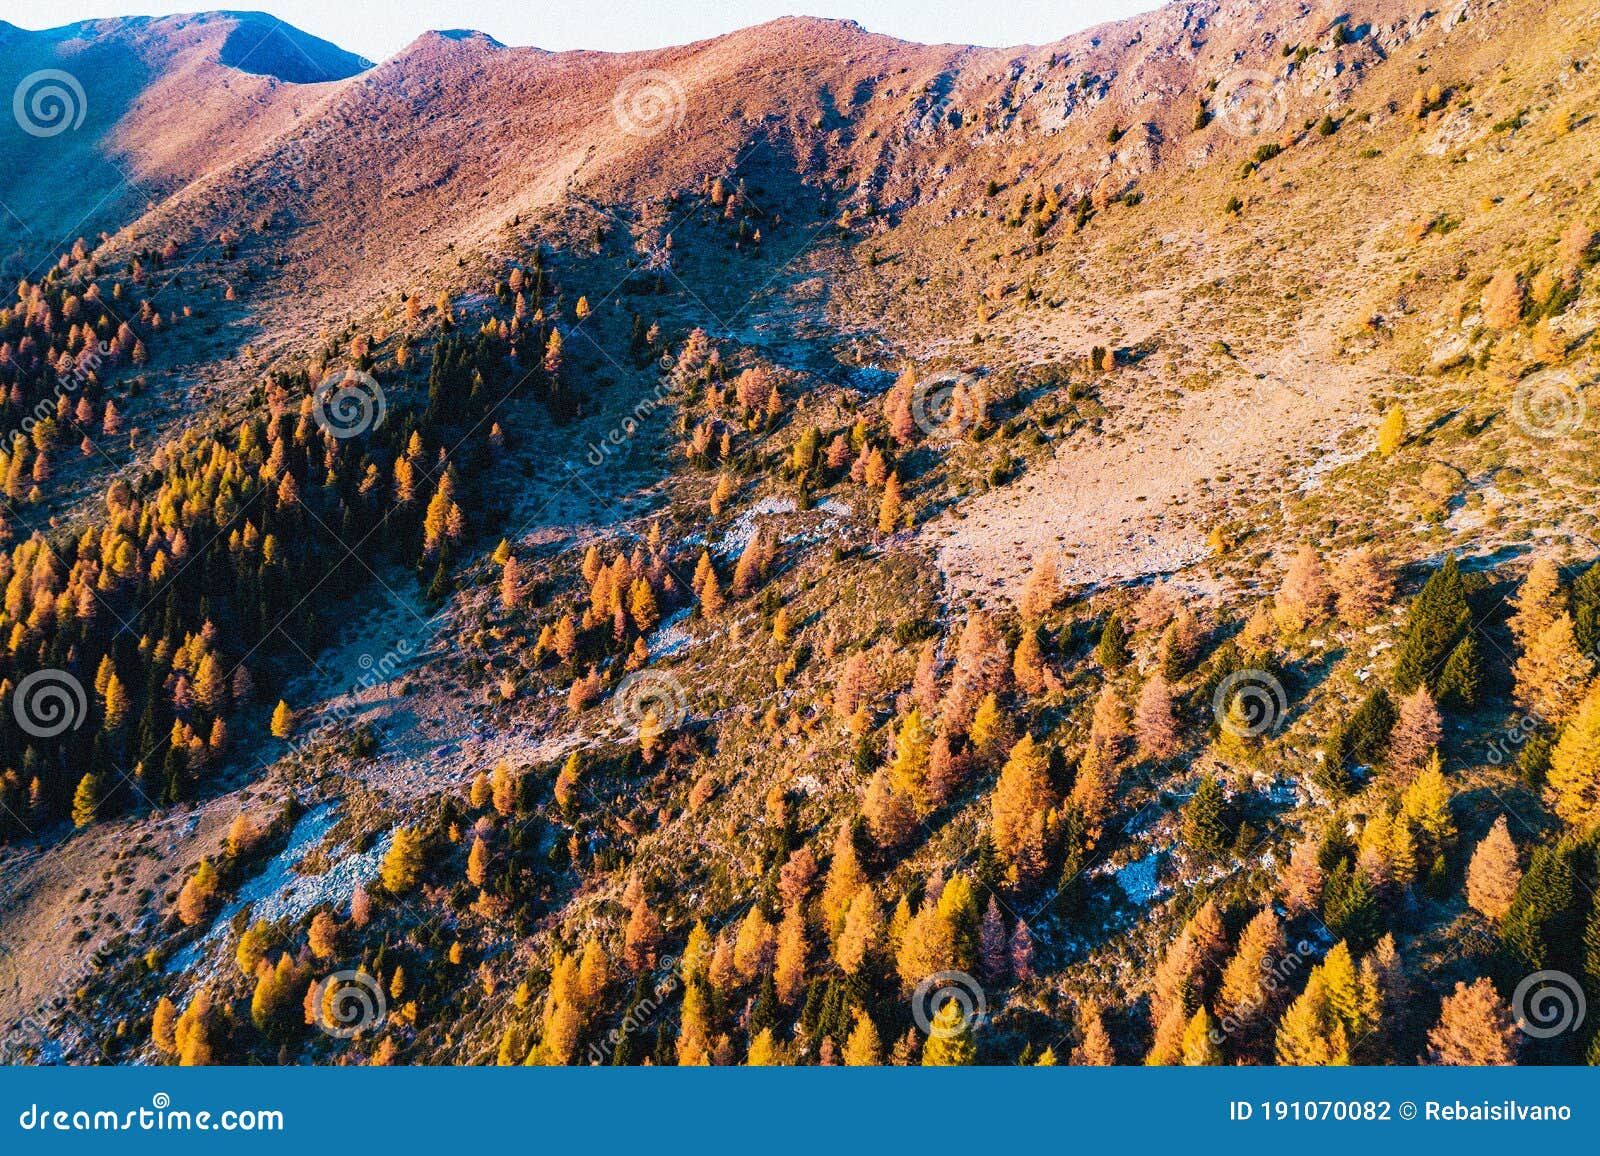 sondrio - valtellina it - autumnal view of alpe colina